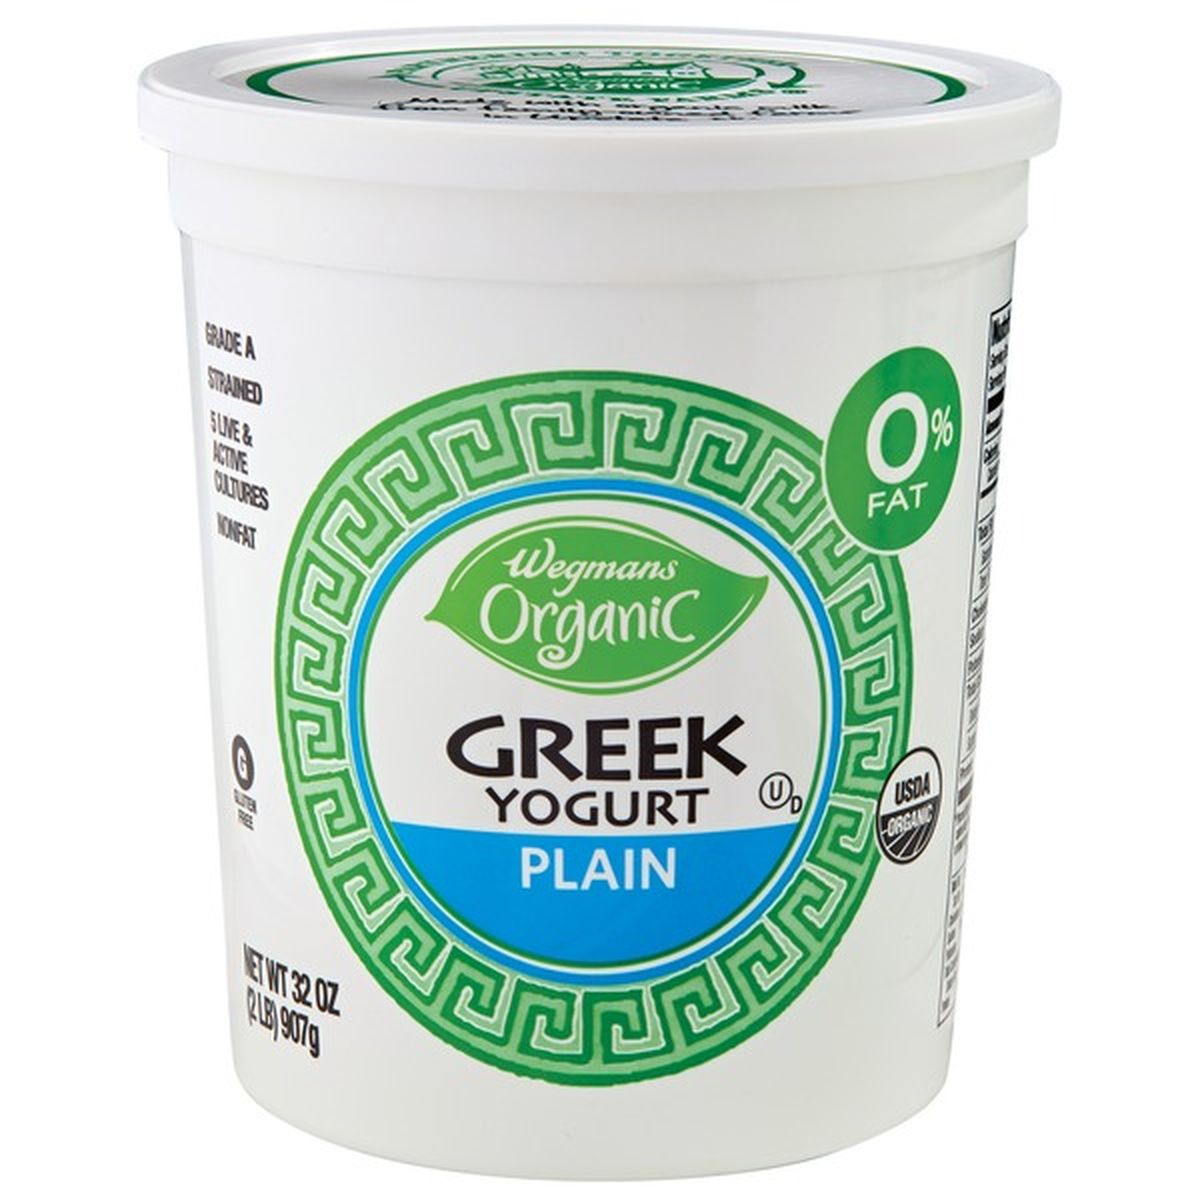 Calories in Wegmans Organic Greek Plain Nonfat Yogurt